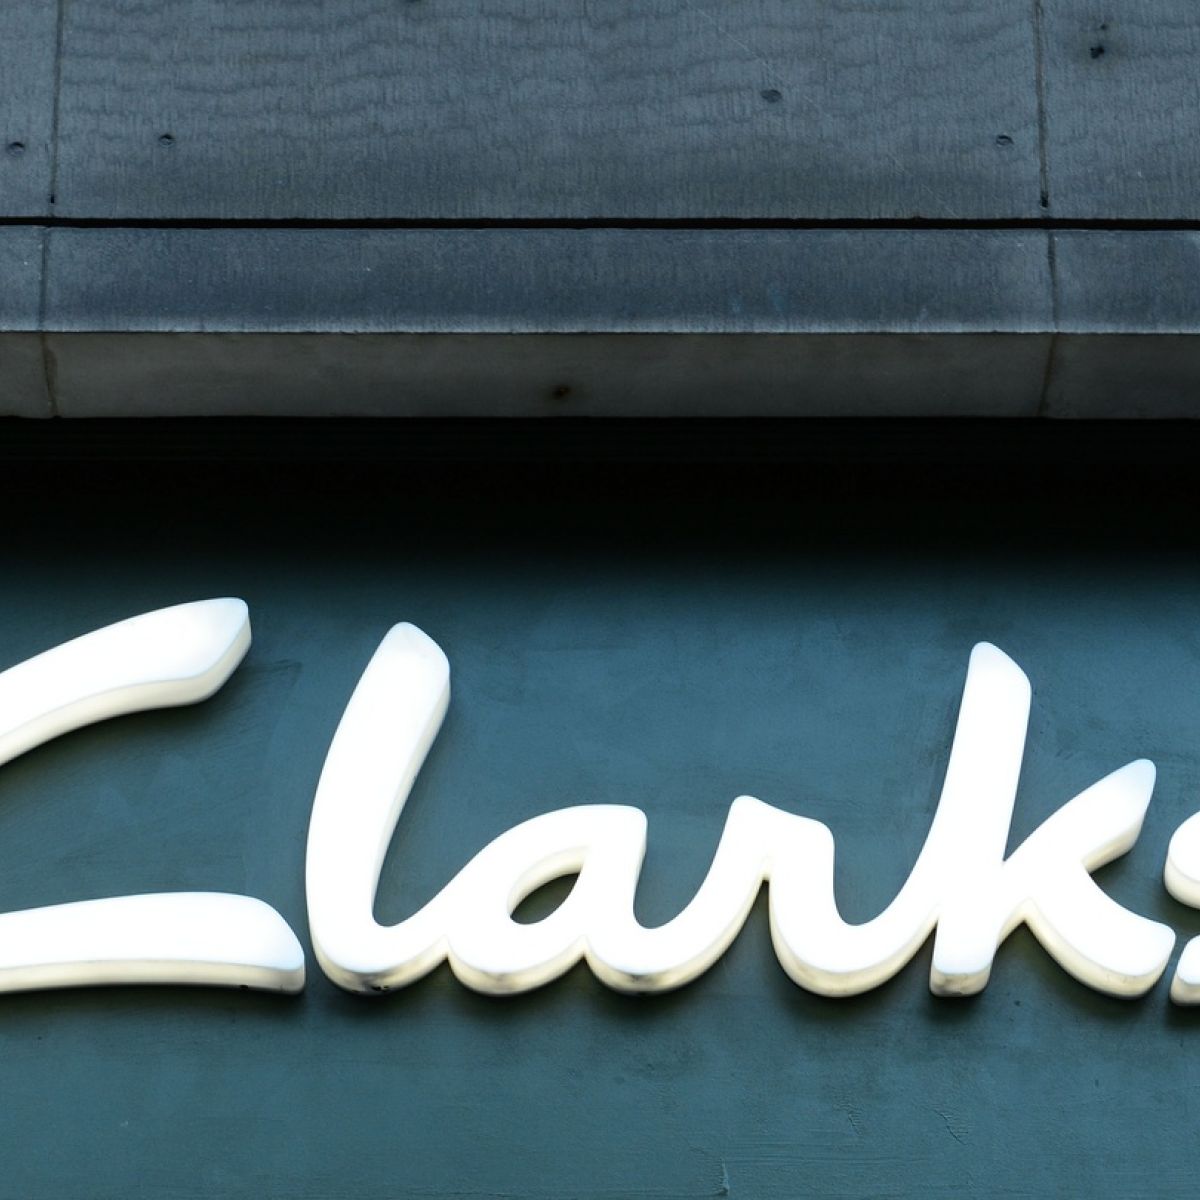 clarks shoes dublin streets